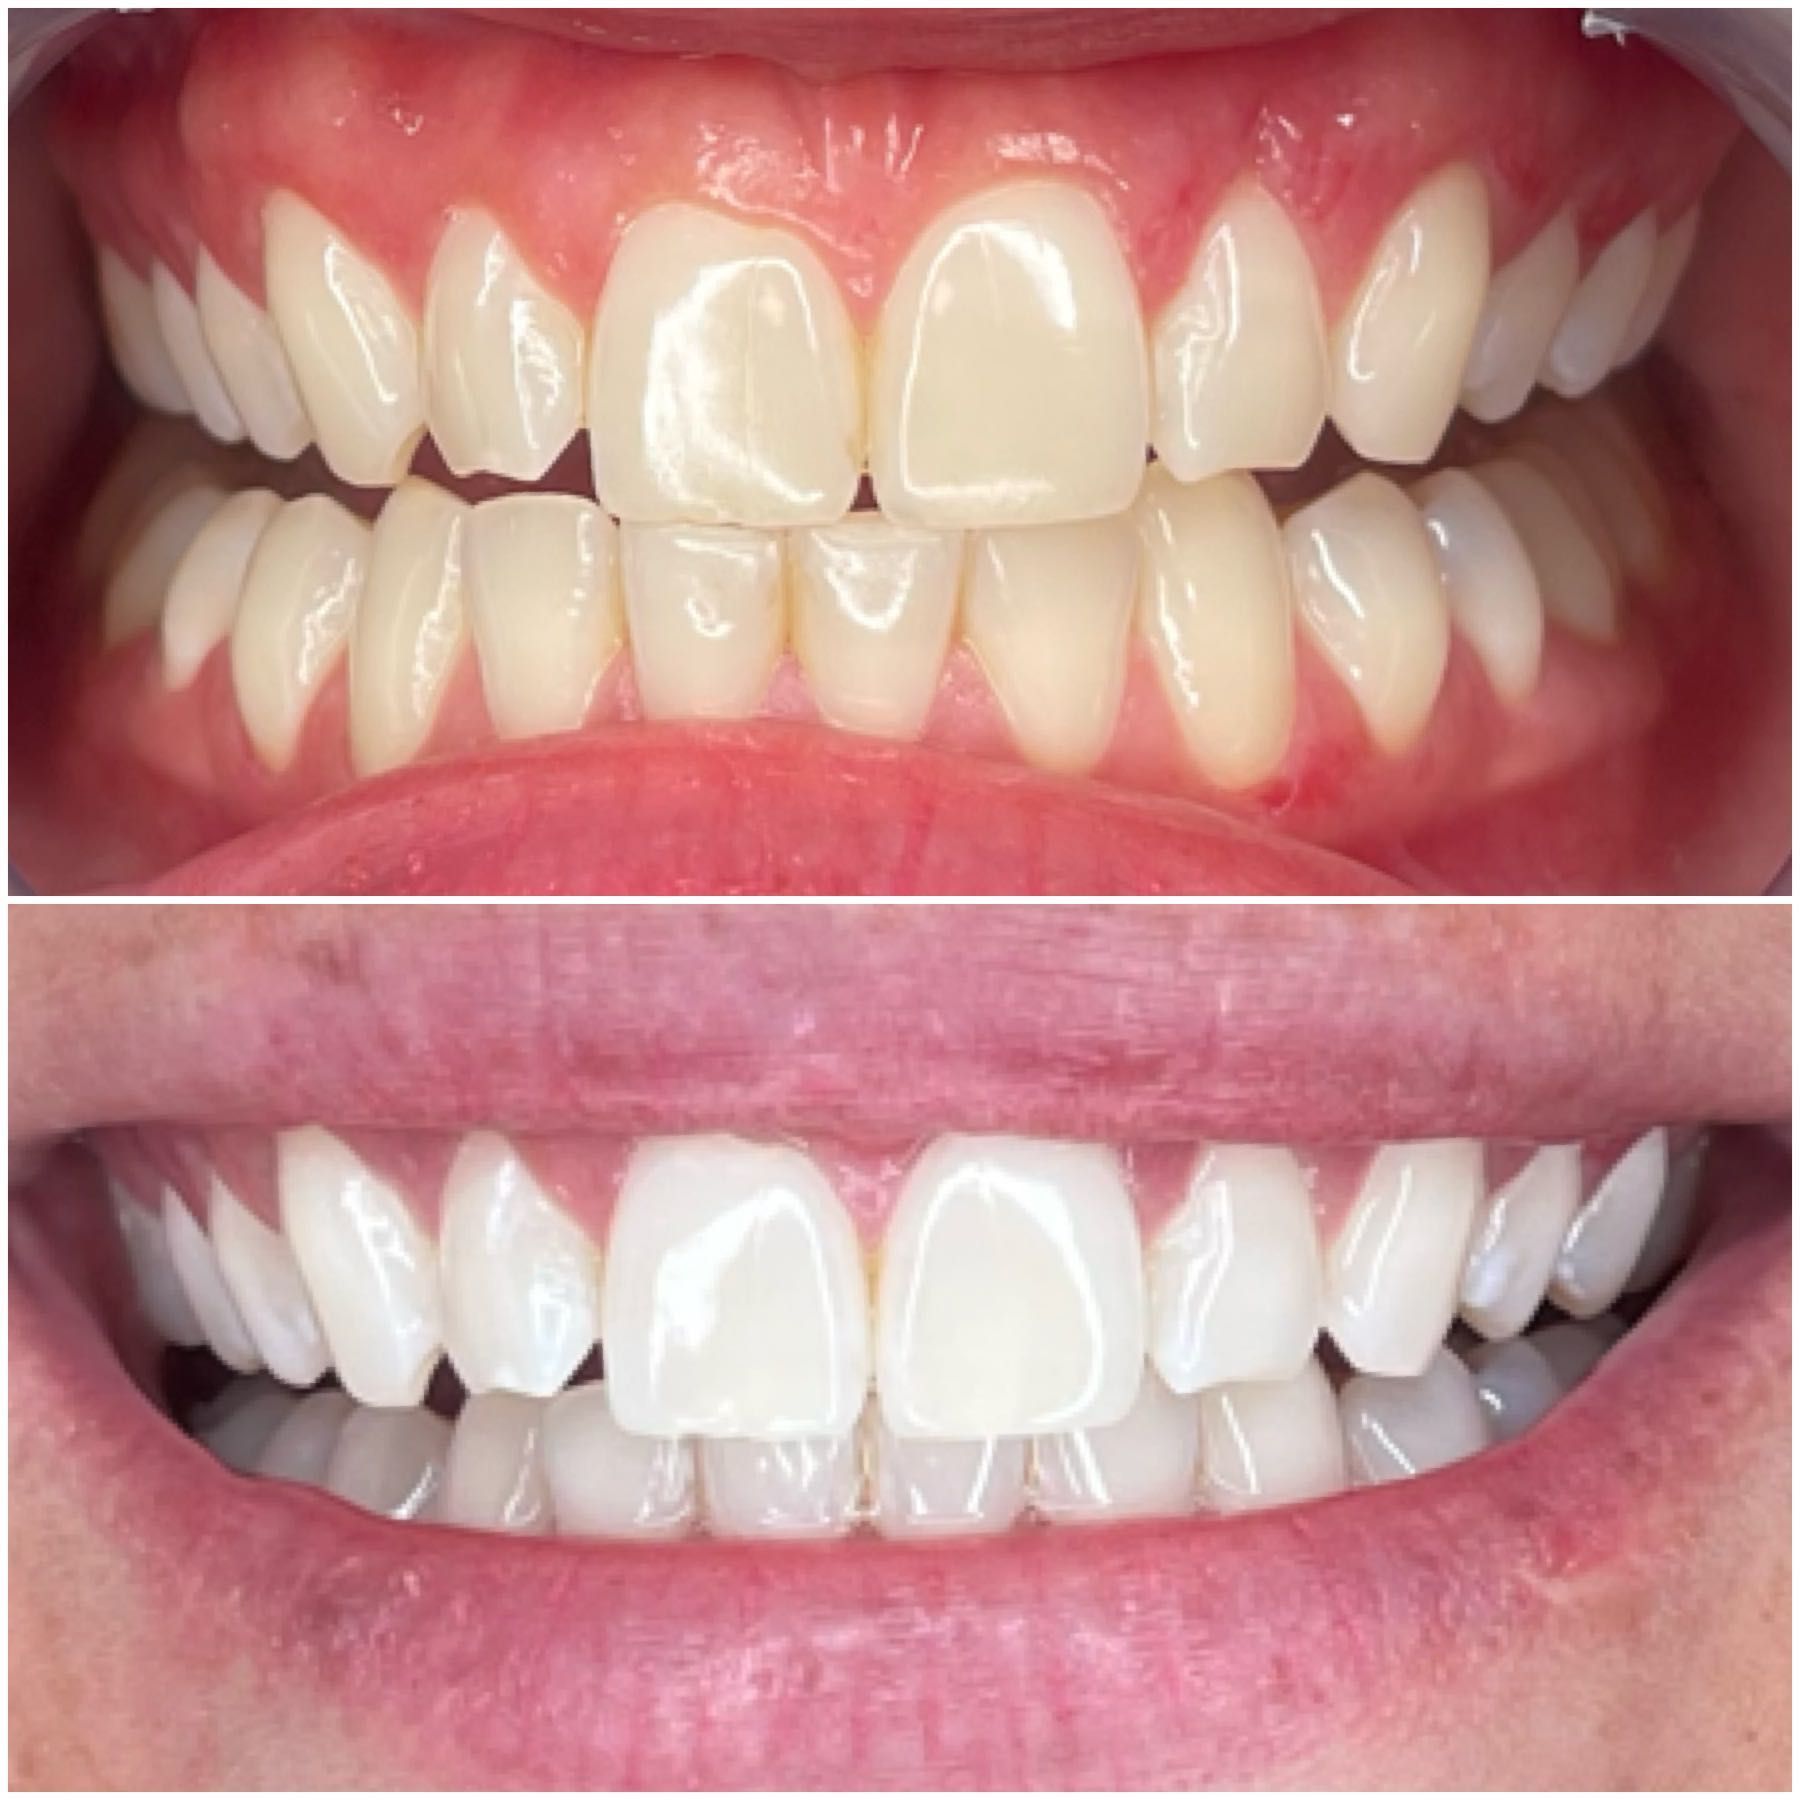 Teeth Whitening portfolio